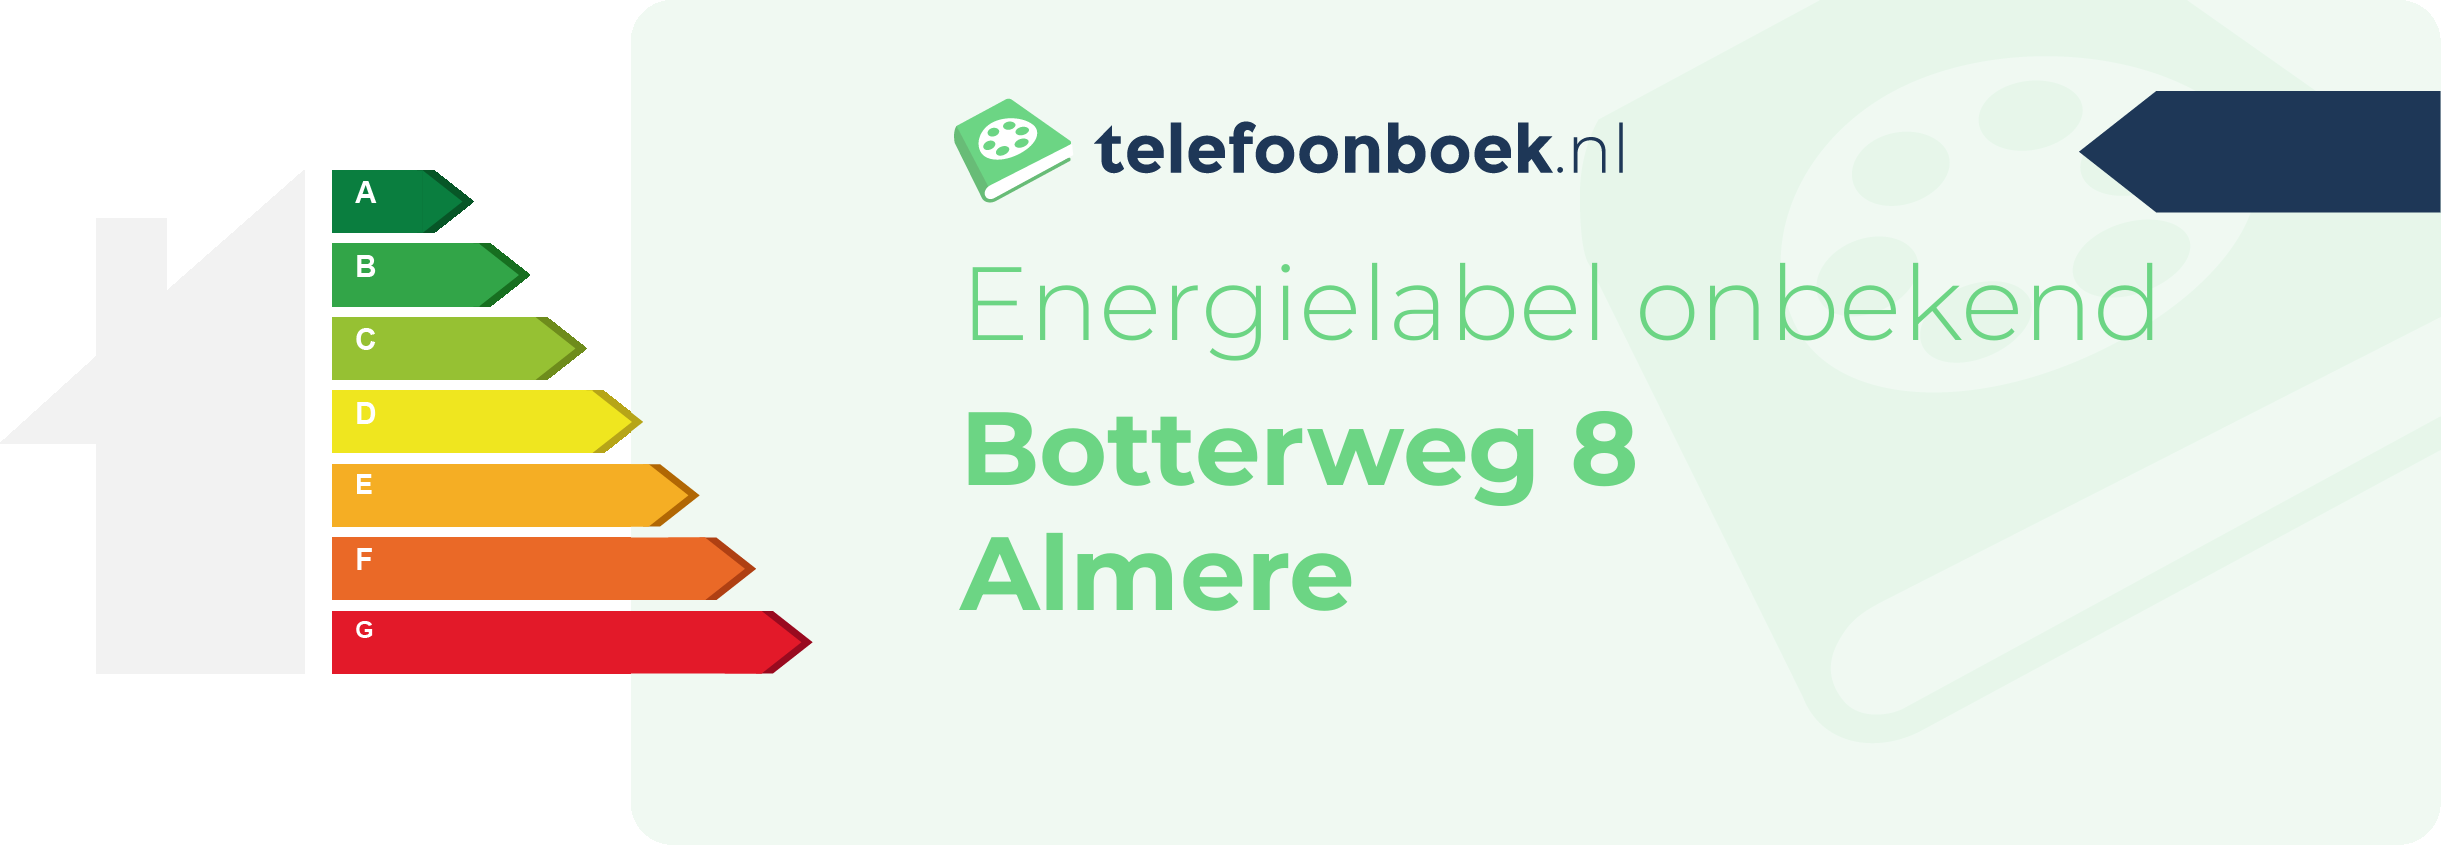 Energielabel Botterweg 8 Almere